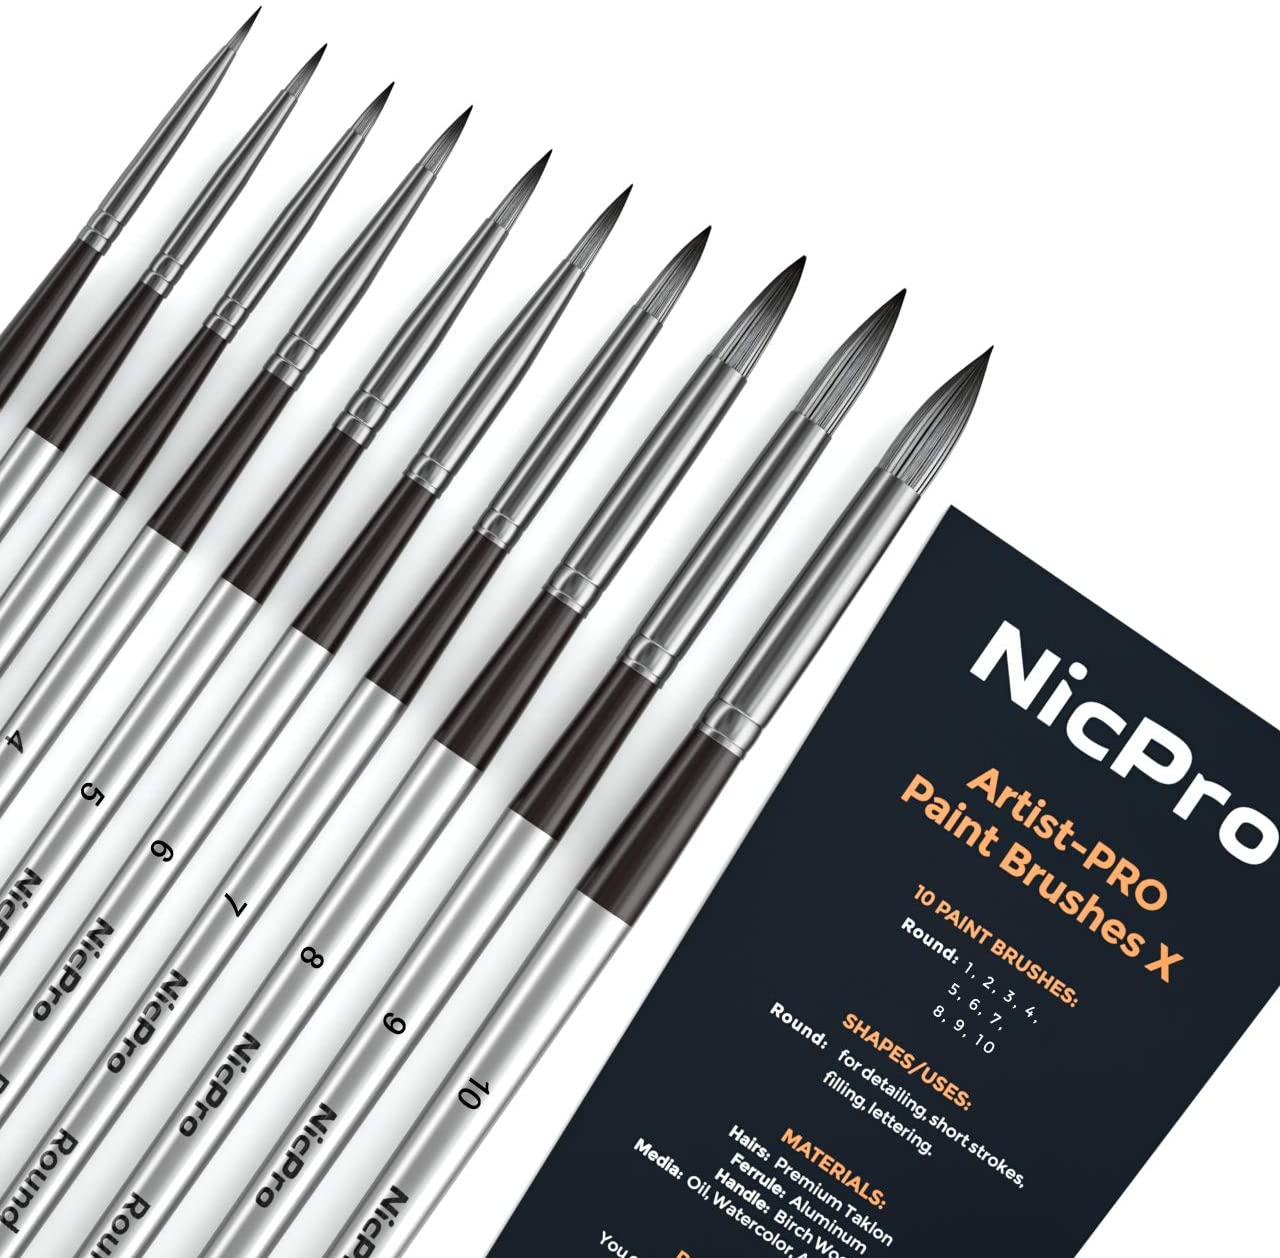 Nicpro 10 PCS Round Paint Brush Set Artist Painting Brushes for Watercolor Acrylic Oil, Art Paintbrush